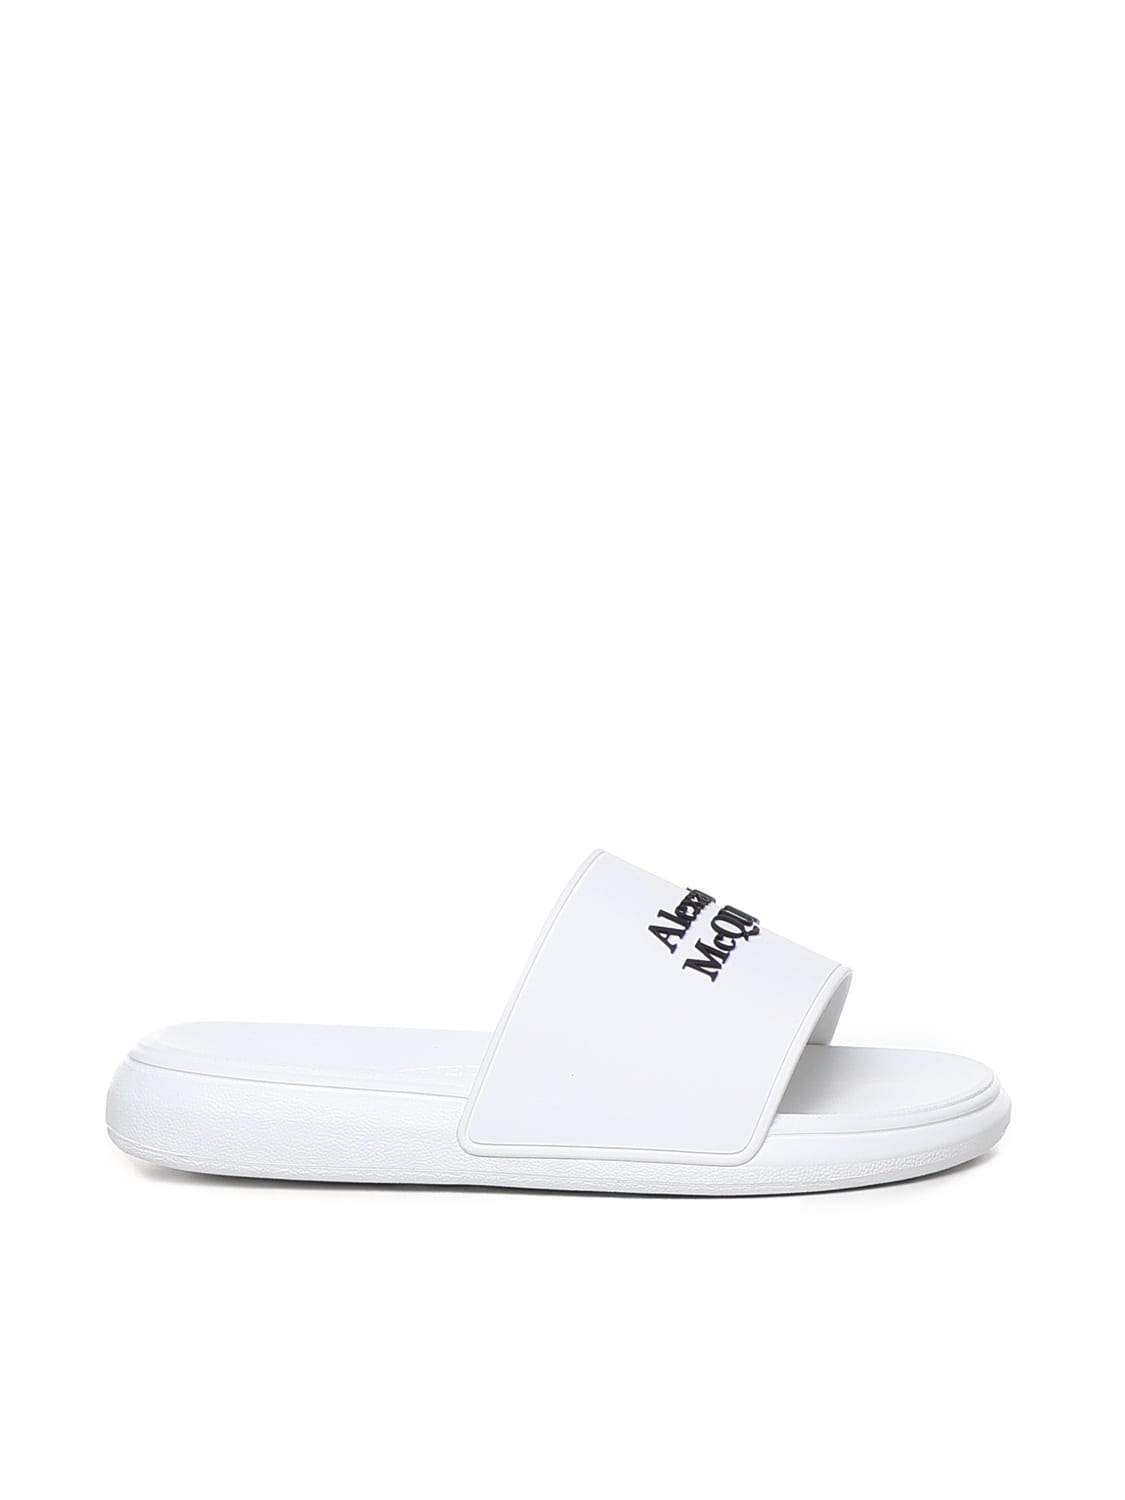 Alexander Mcqueen Rubber Sandals With Logo In White/black